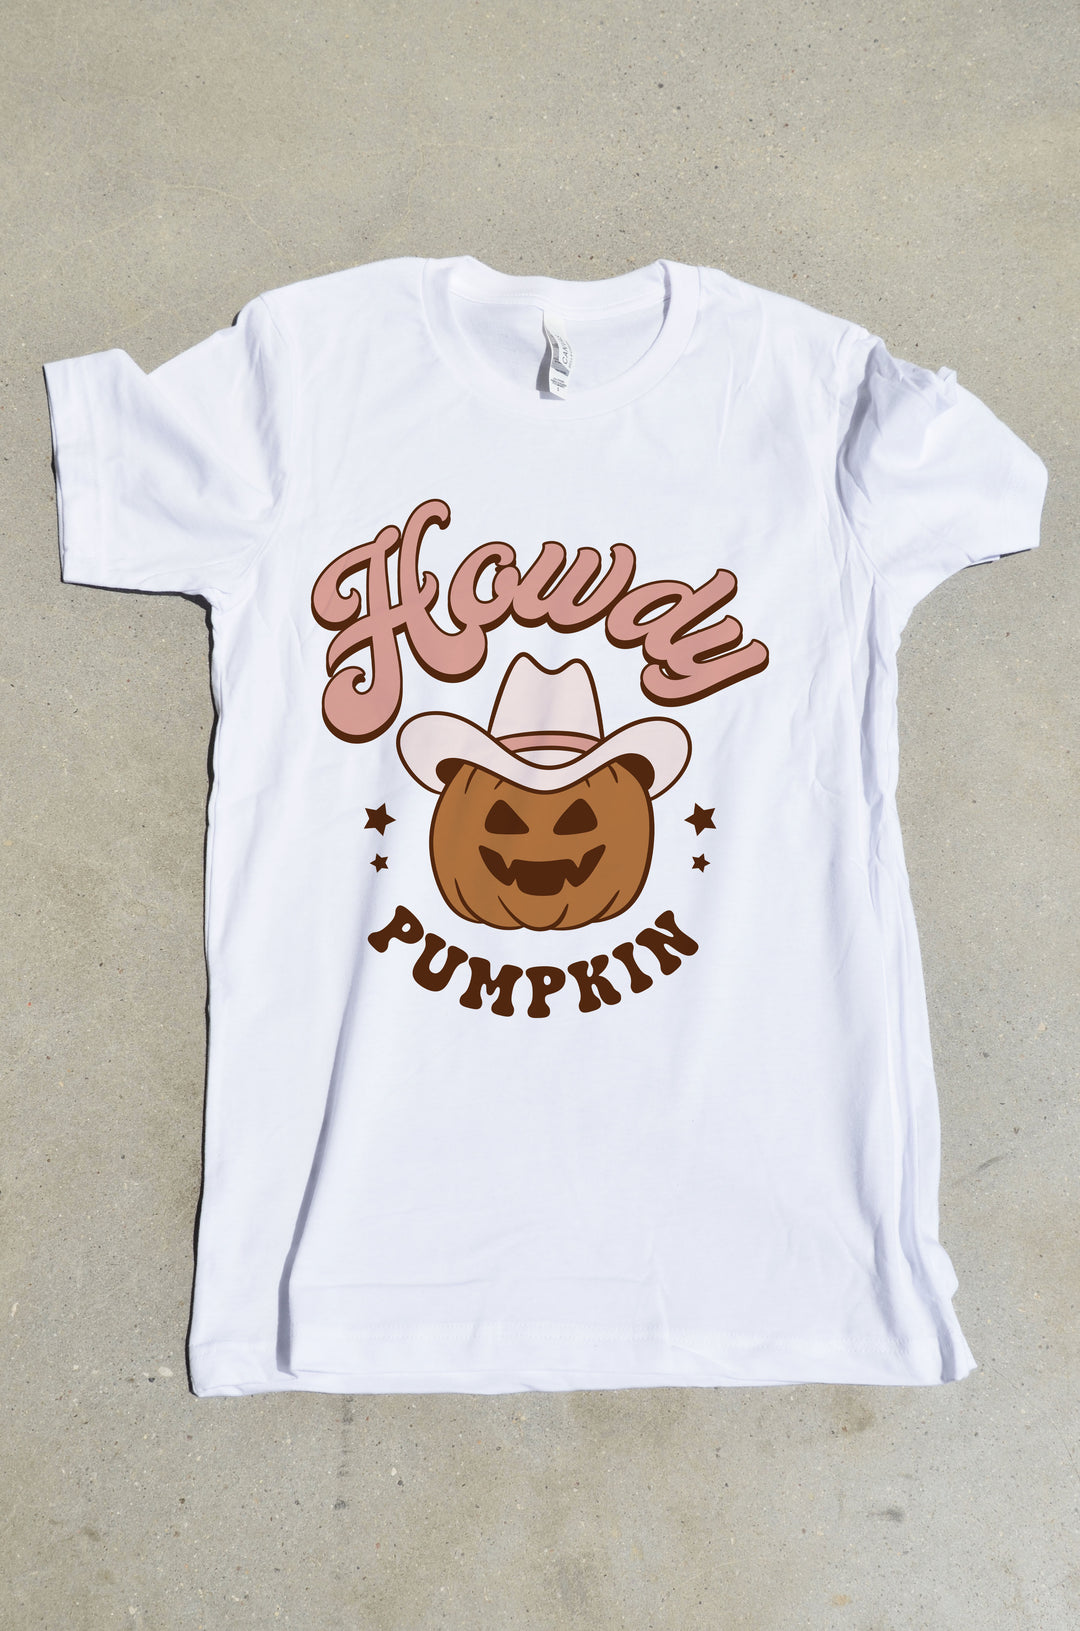 Glamfox - Howdy Pumpkin Graphic Top